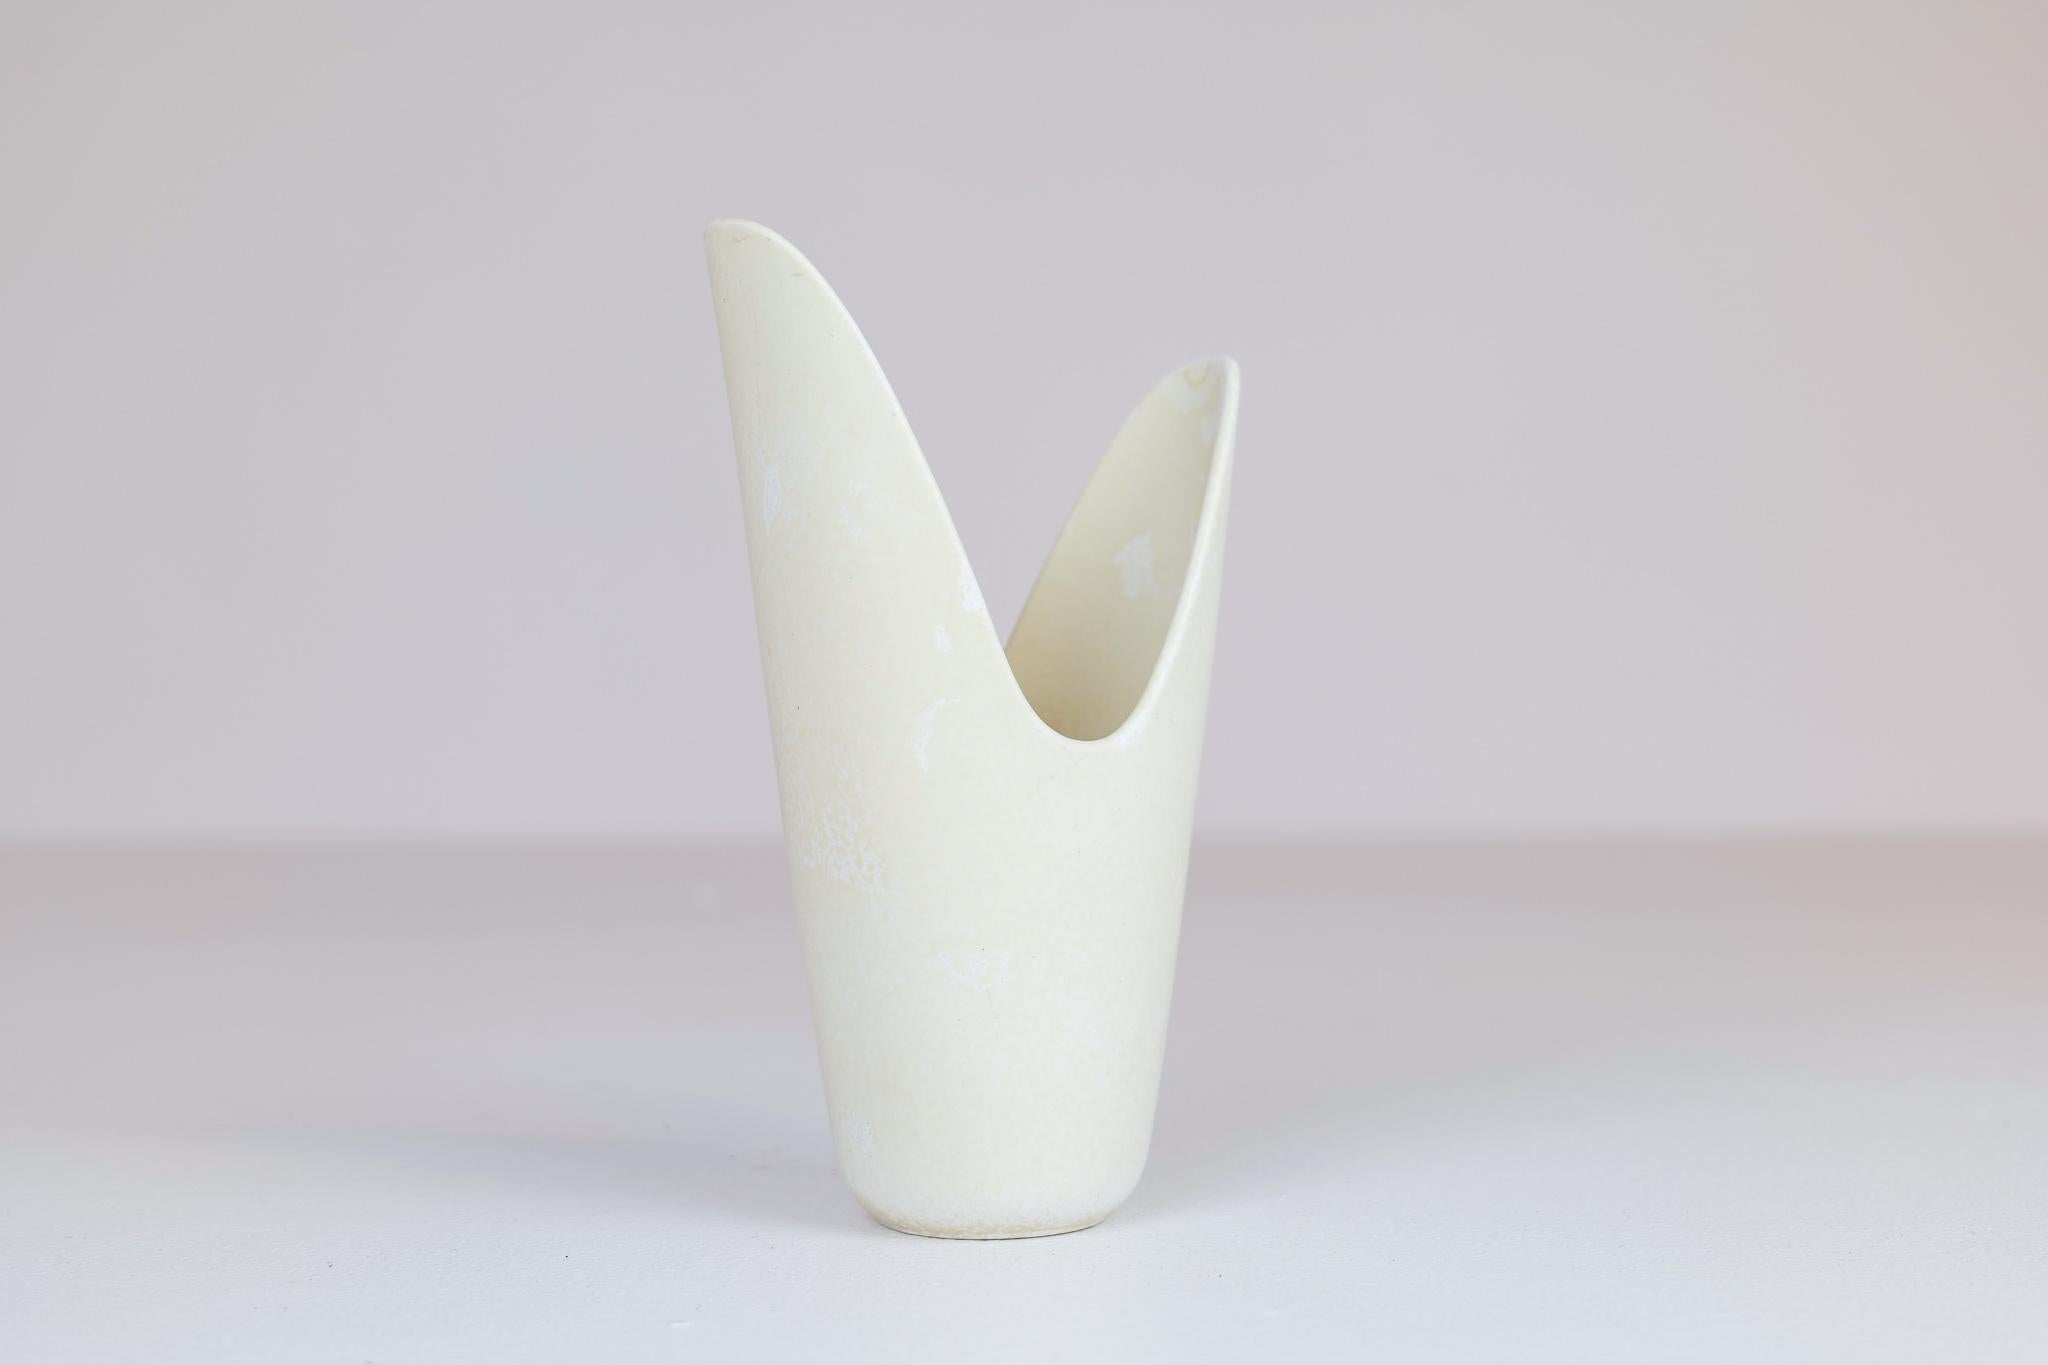 This unusual stoneware vase named 